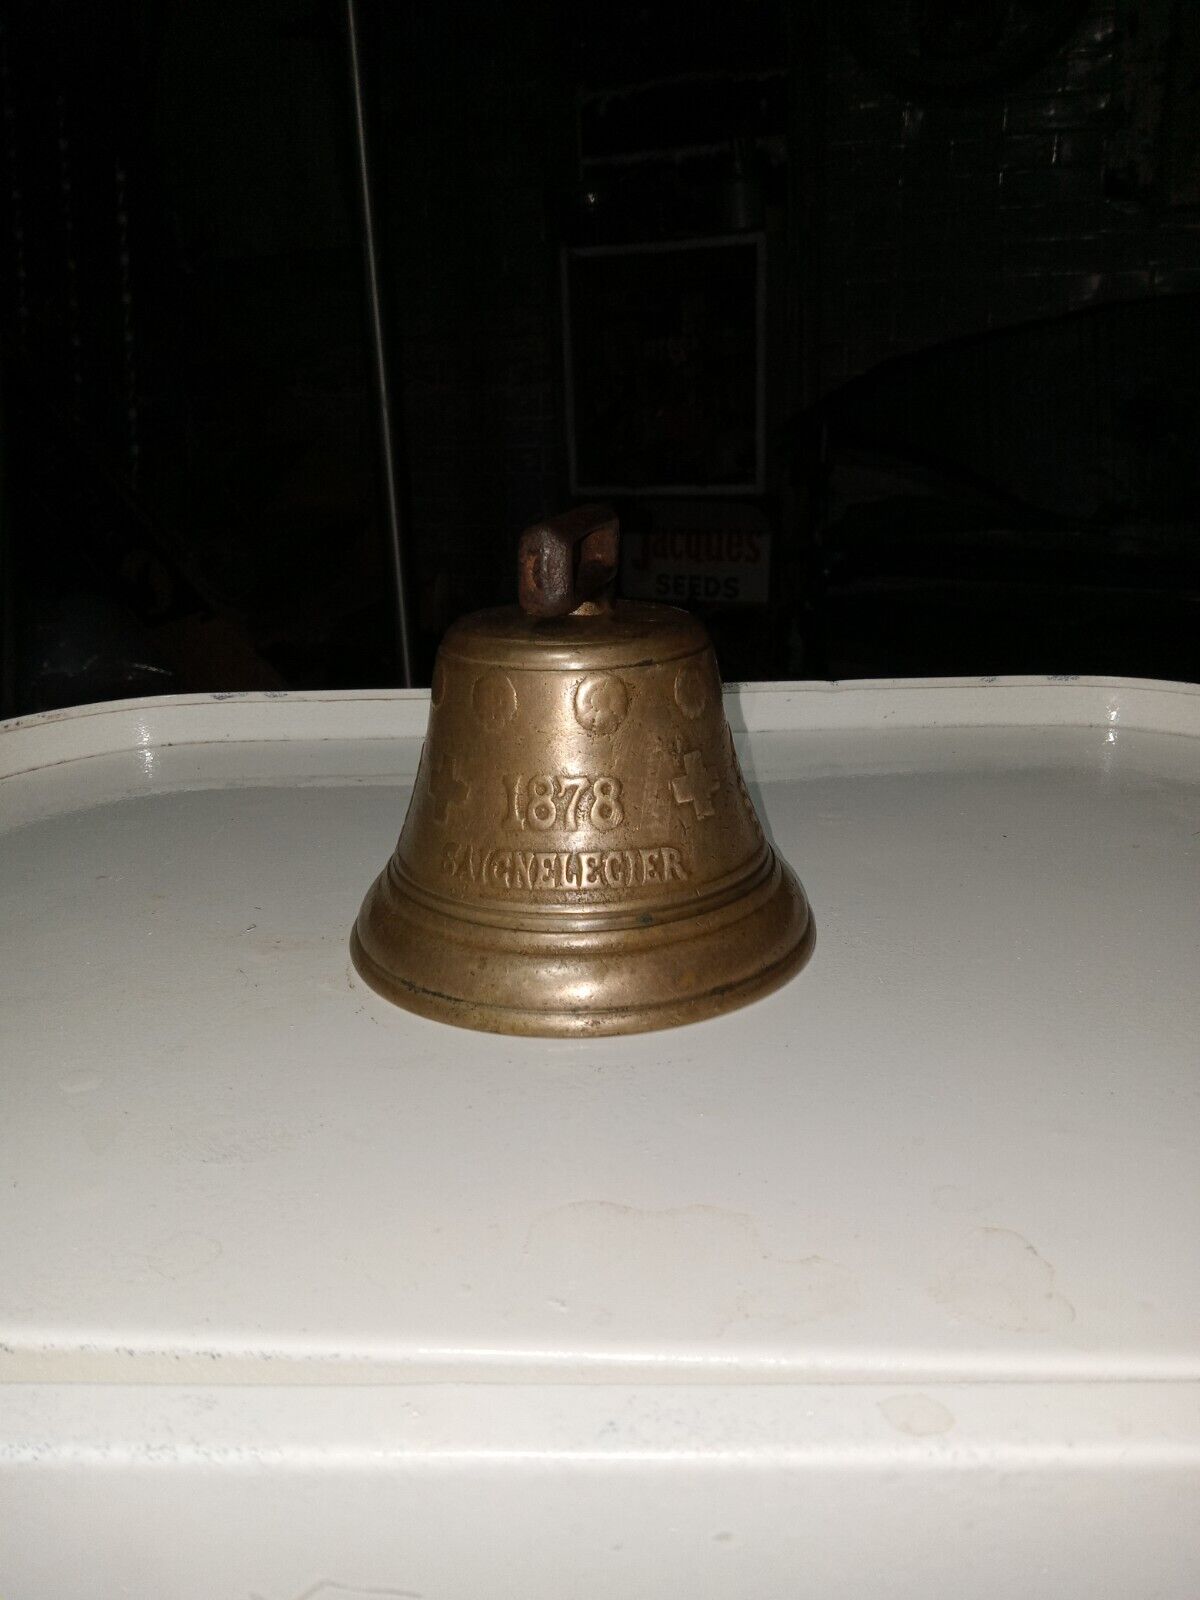 1878 Saignelegier Chiantel Fondeur Brass Bell